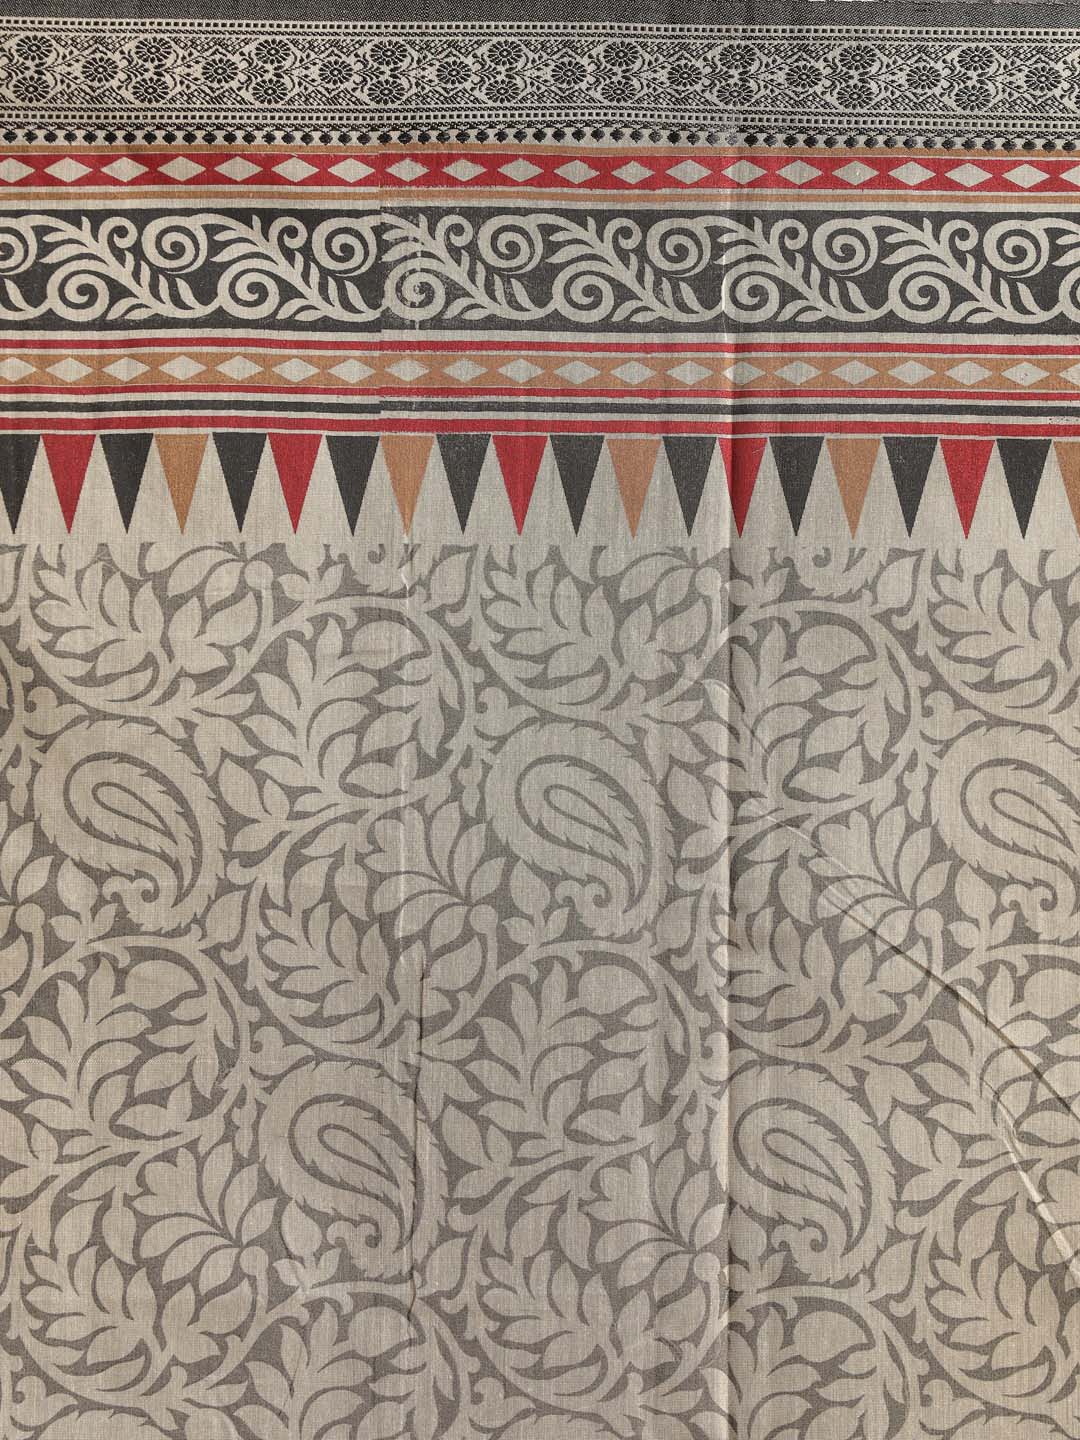 Indethnic Printed Cotton Blend Saree in Grey - Saree Detail View